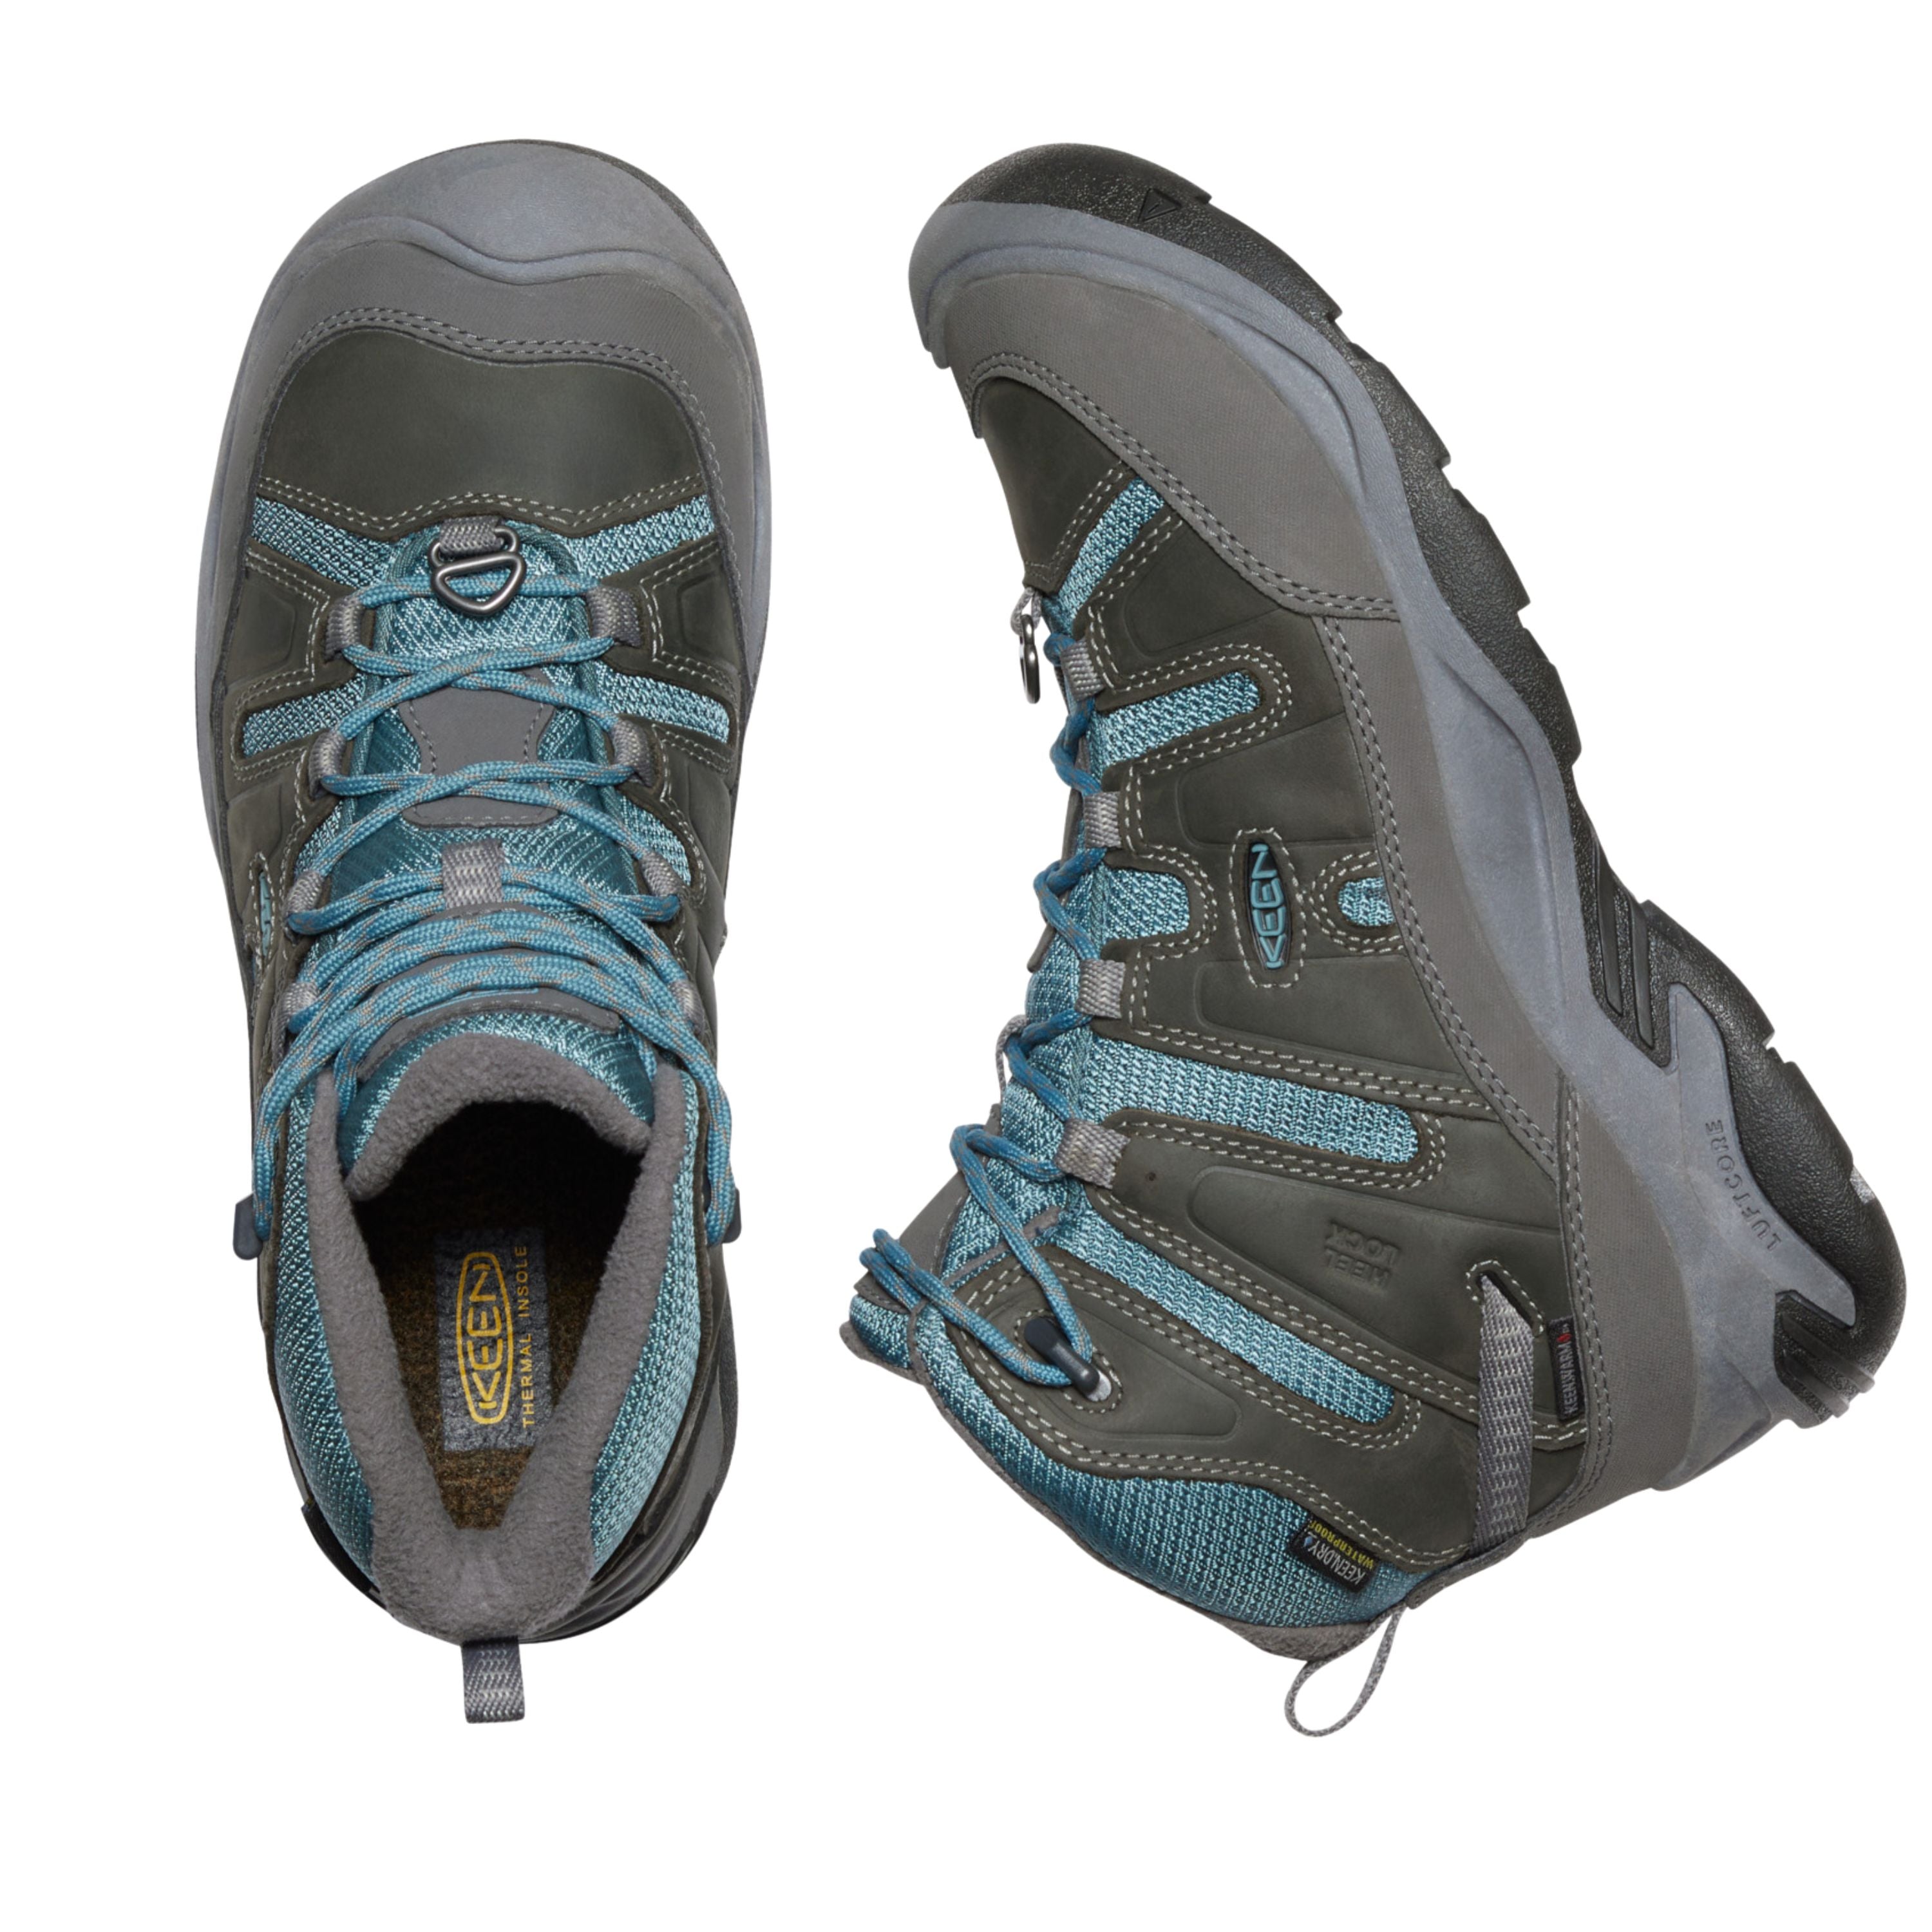 Bottes de randonnée isolées "Circadia MID Polar" - Femme||"Circadia MID Polar" Insulated hiking boots - Women's